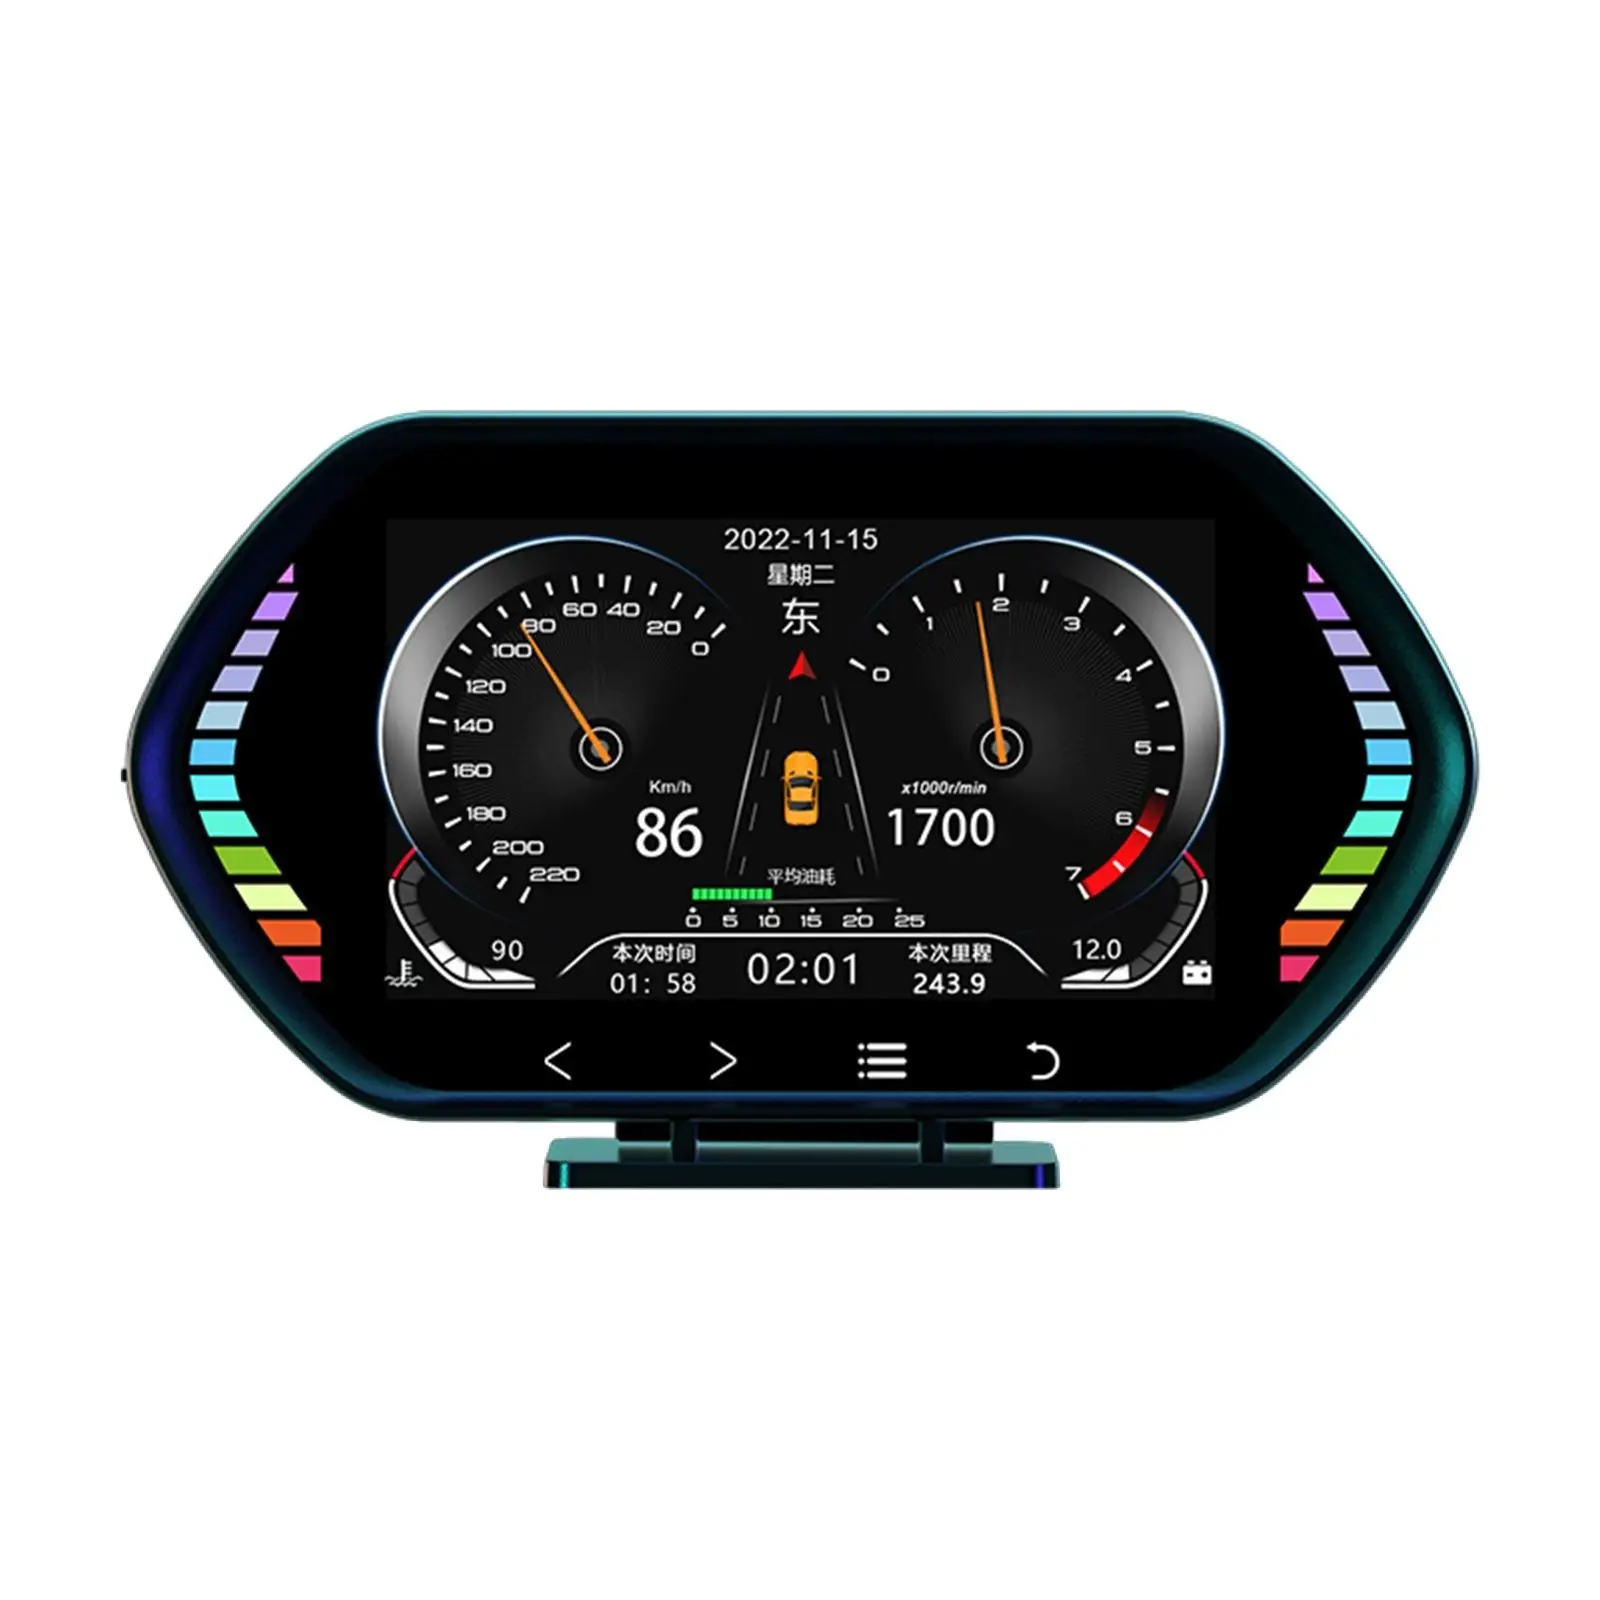 OBD2 Gauge Display Troubleshooting 4.5inch OBD LCD Display Car Head up Display Digital Speedometer for Cars Most Vehicles